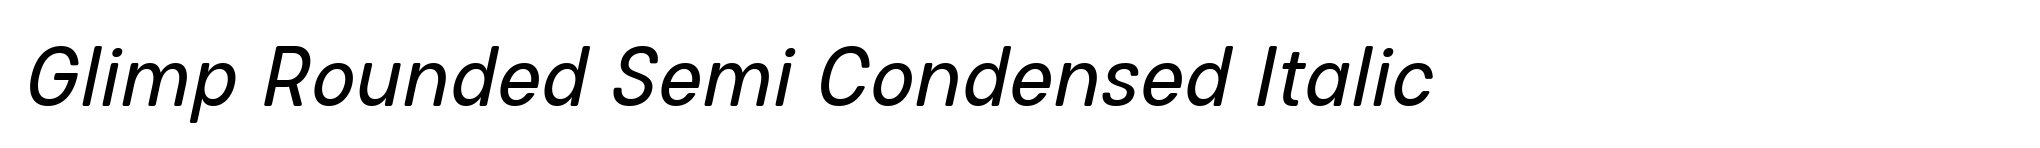 Glimp Rounded Semi Condensed Italic image